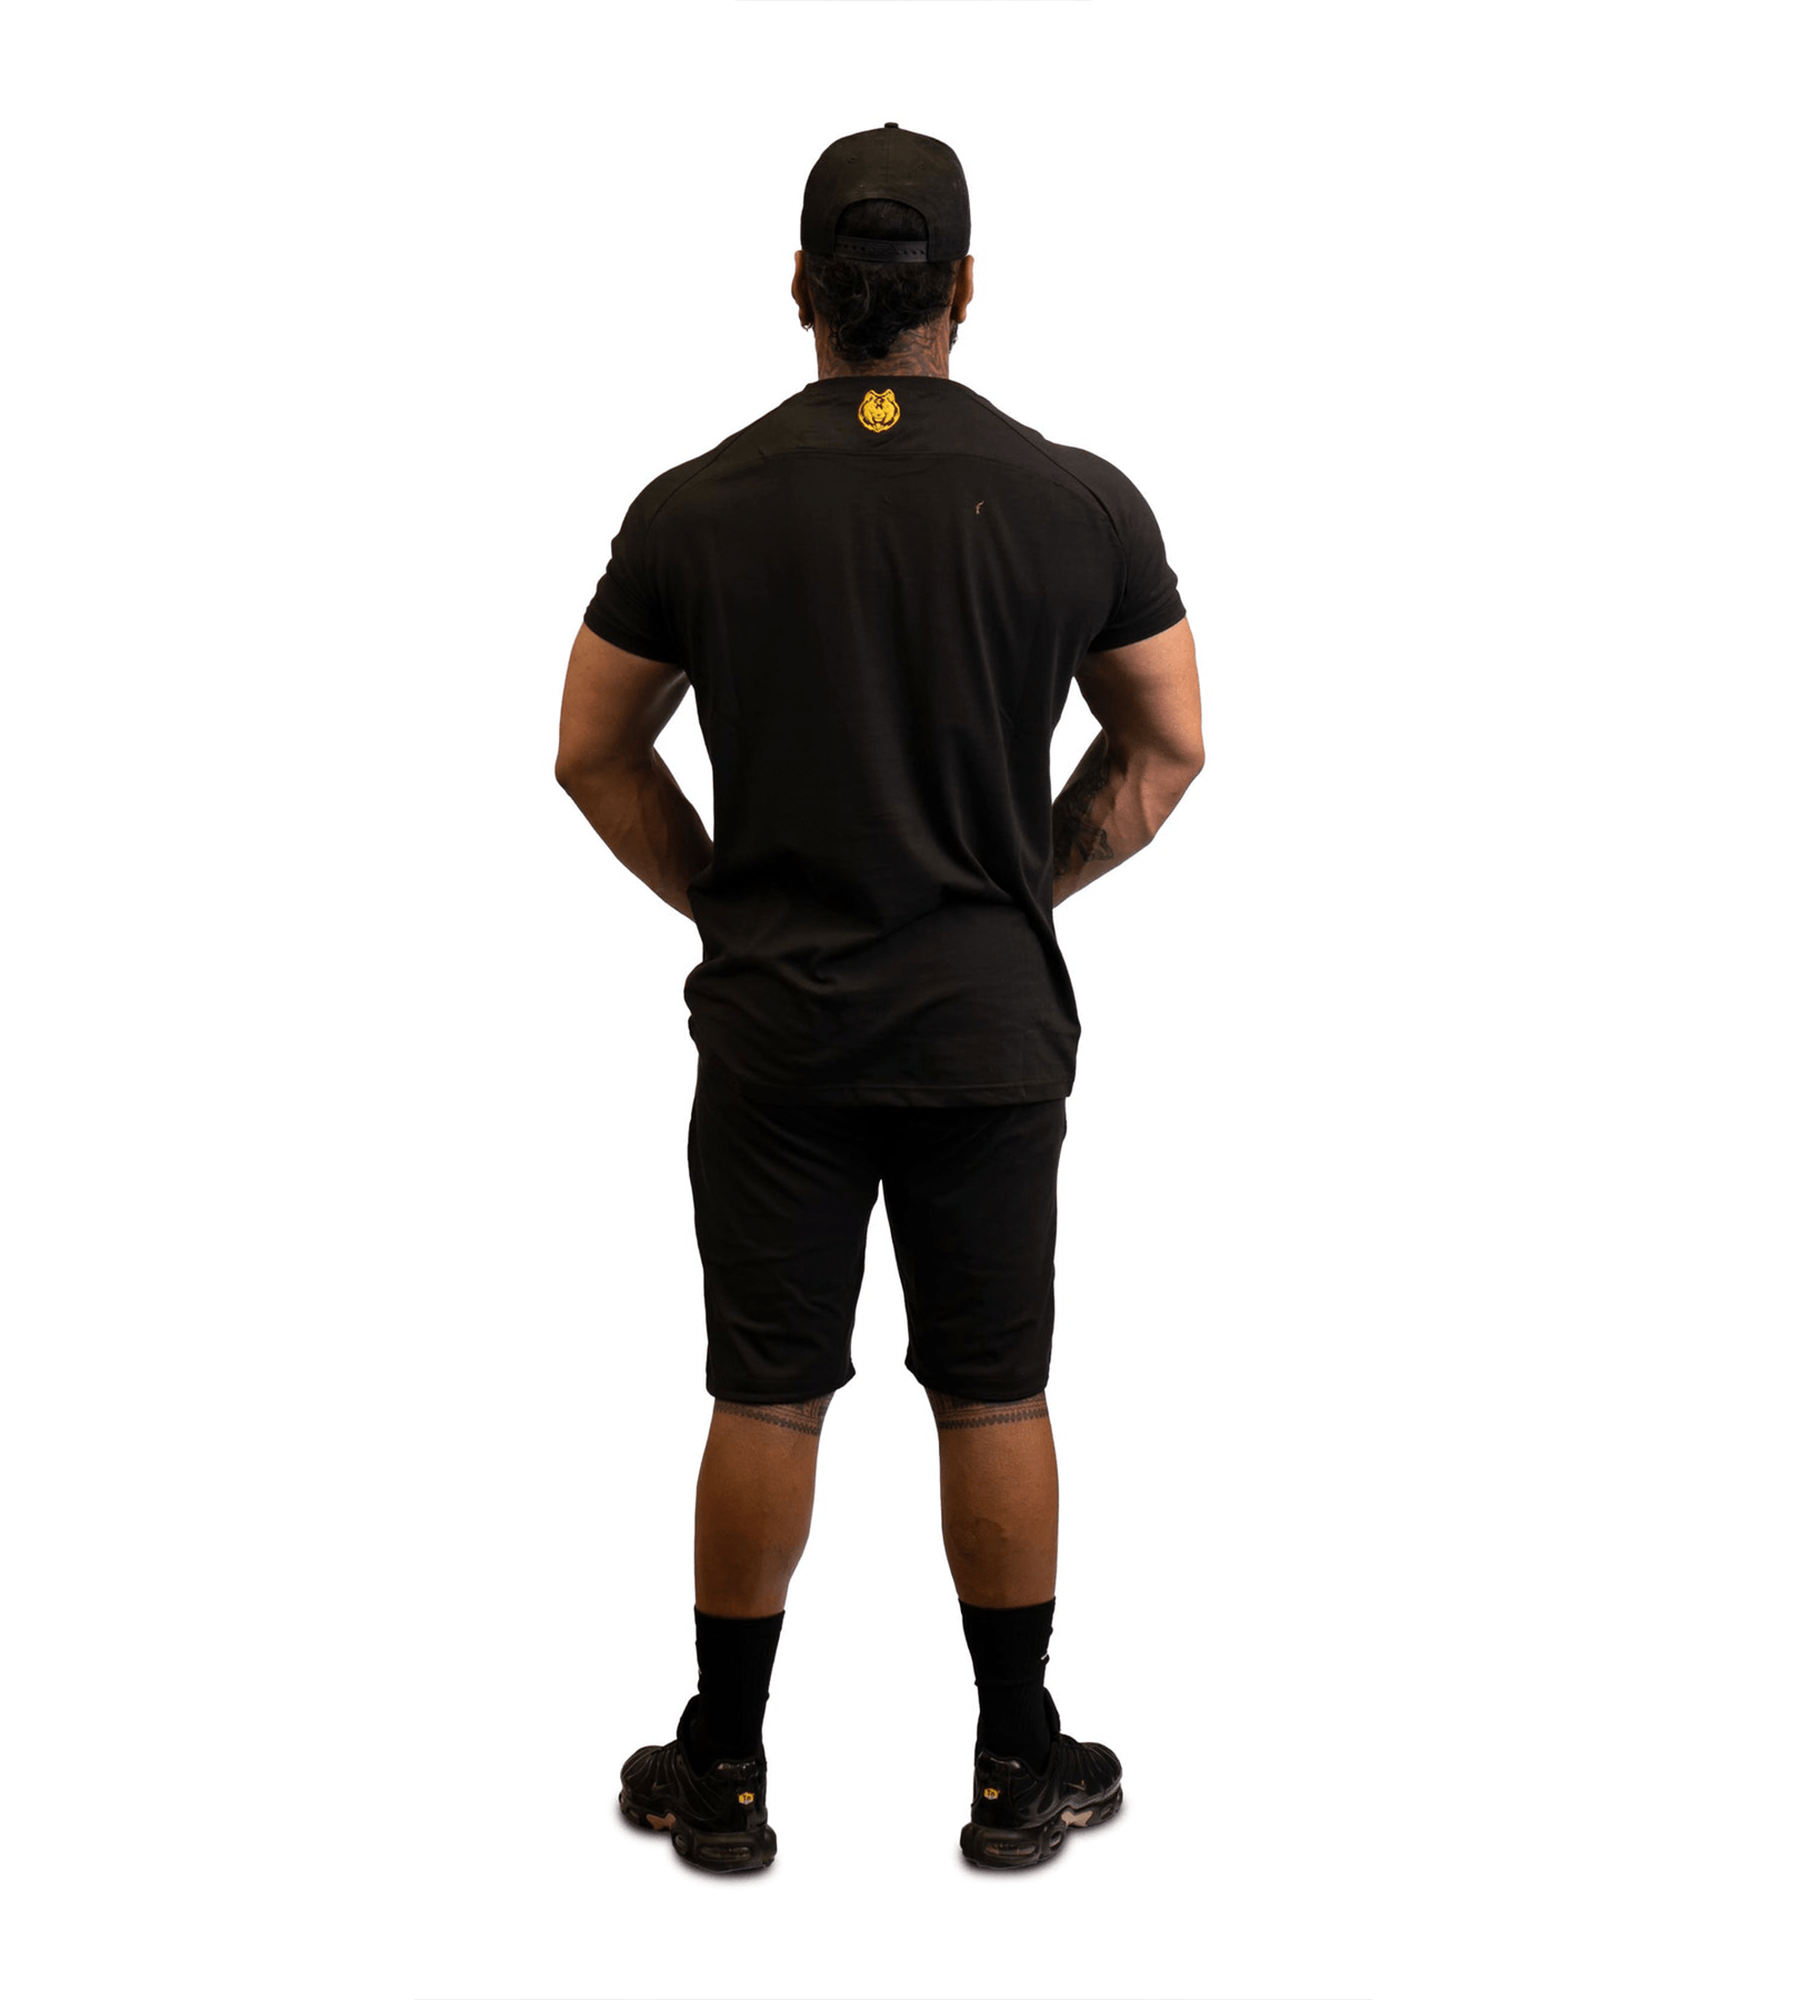 FitnessFox Men's Black T-Shirts